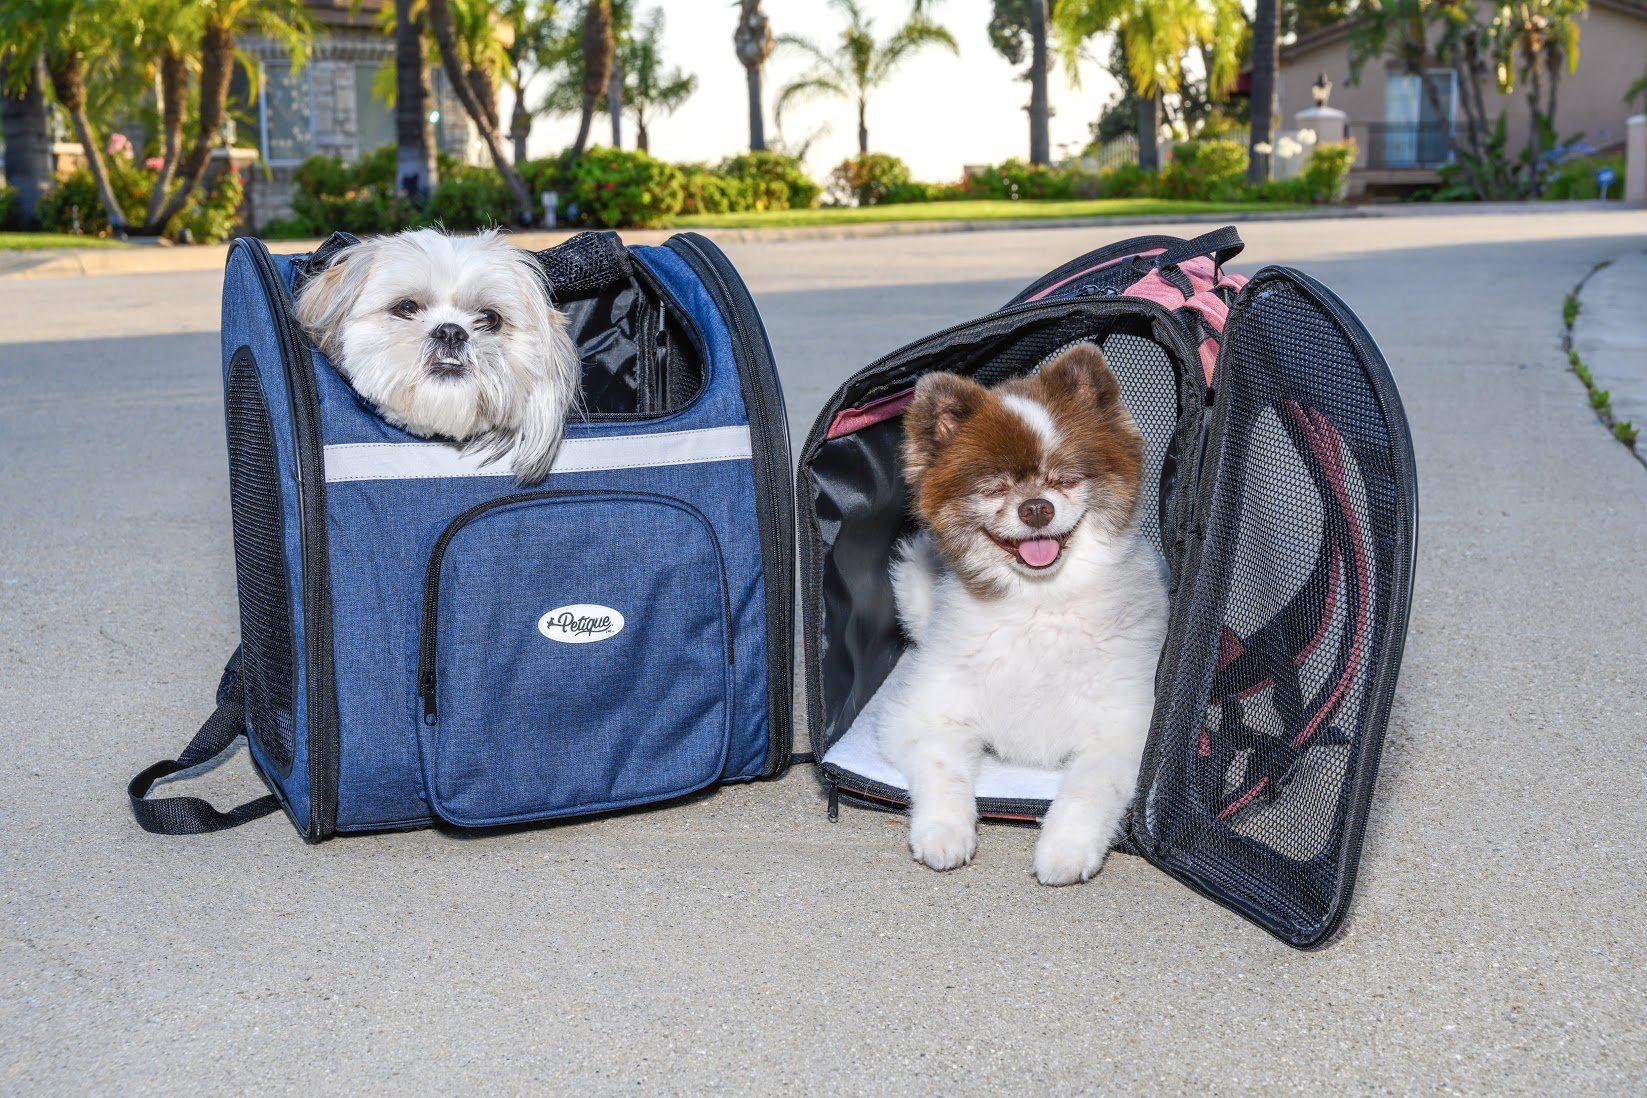 Petique The Backpacker Pet Carrier